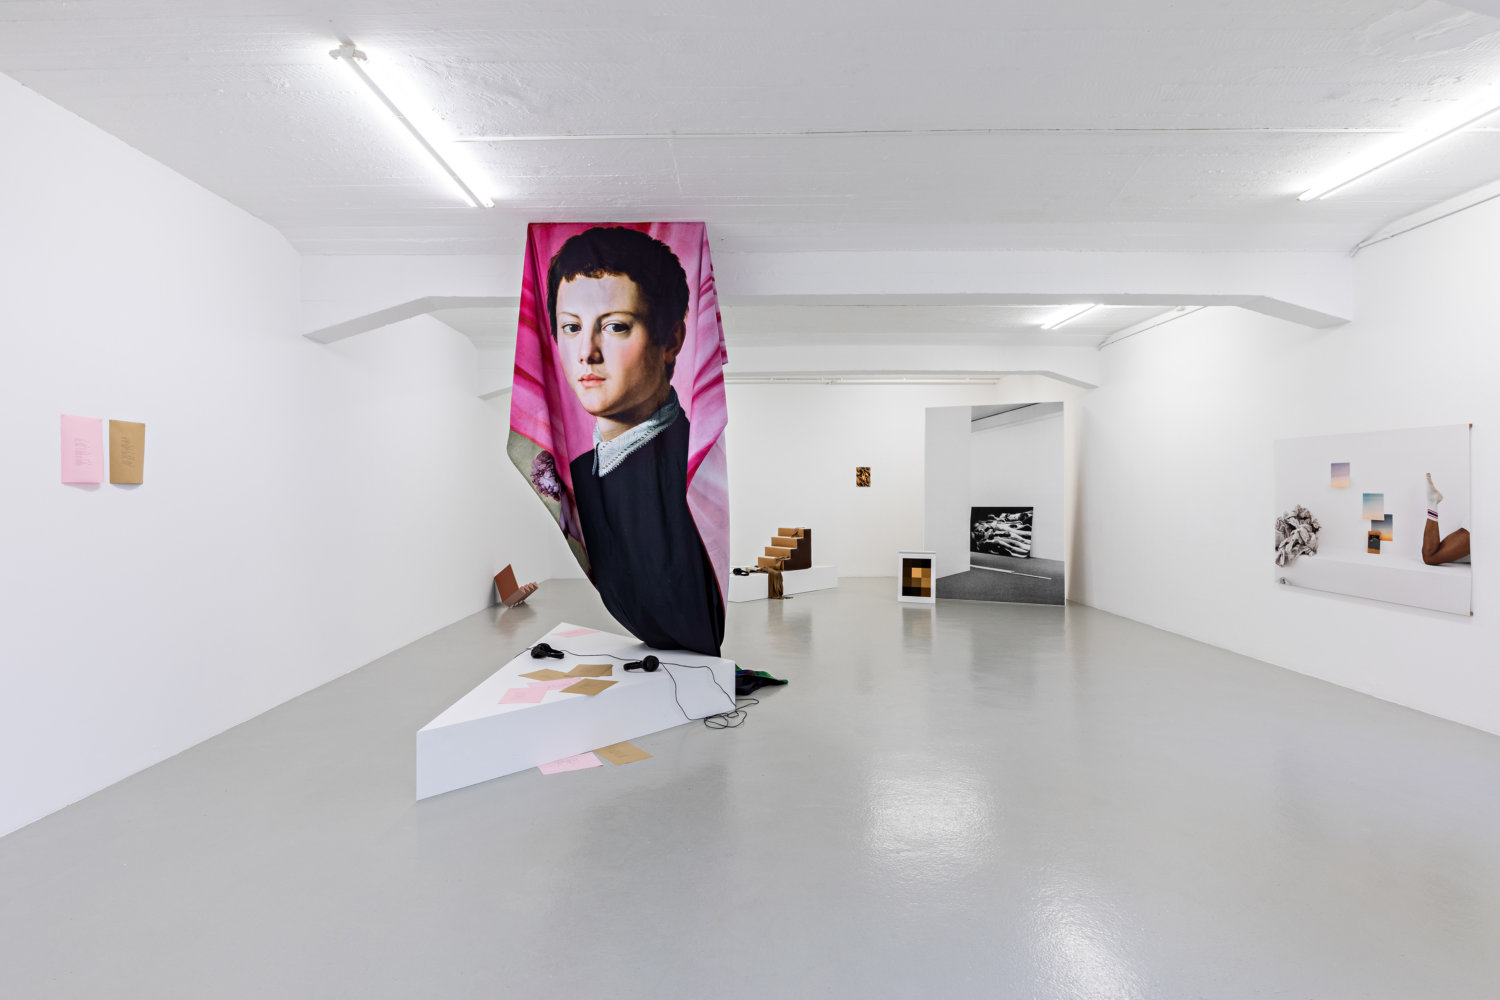 DEU, Bremen, 2022, "La Musique dans la chambre" Exhibition of Jimmy Robert at Künstlerhaus Bremen, Copyright photo: Fred Dott